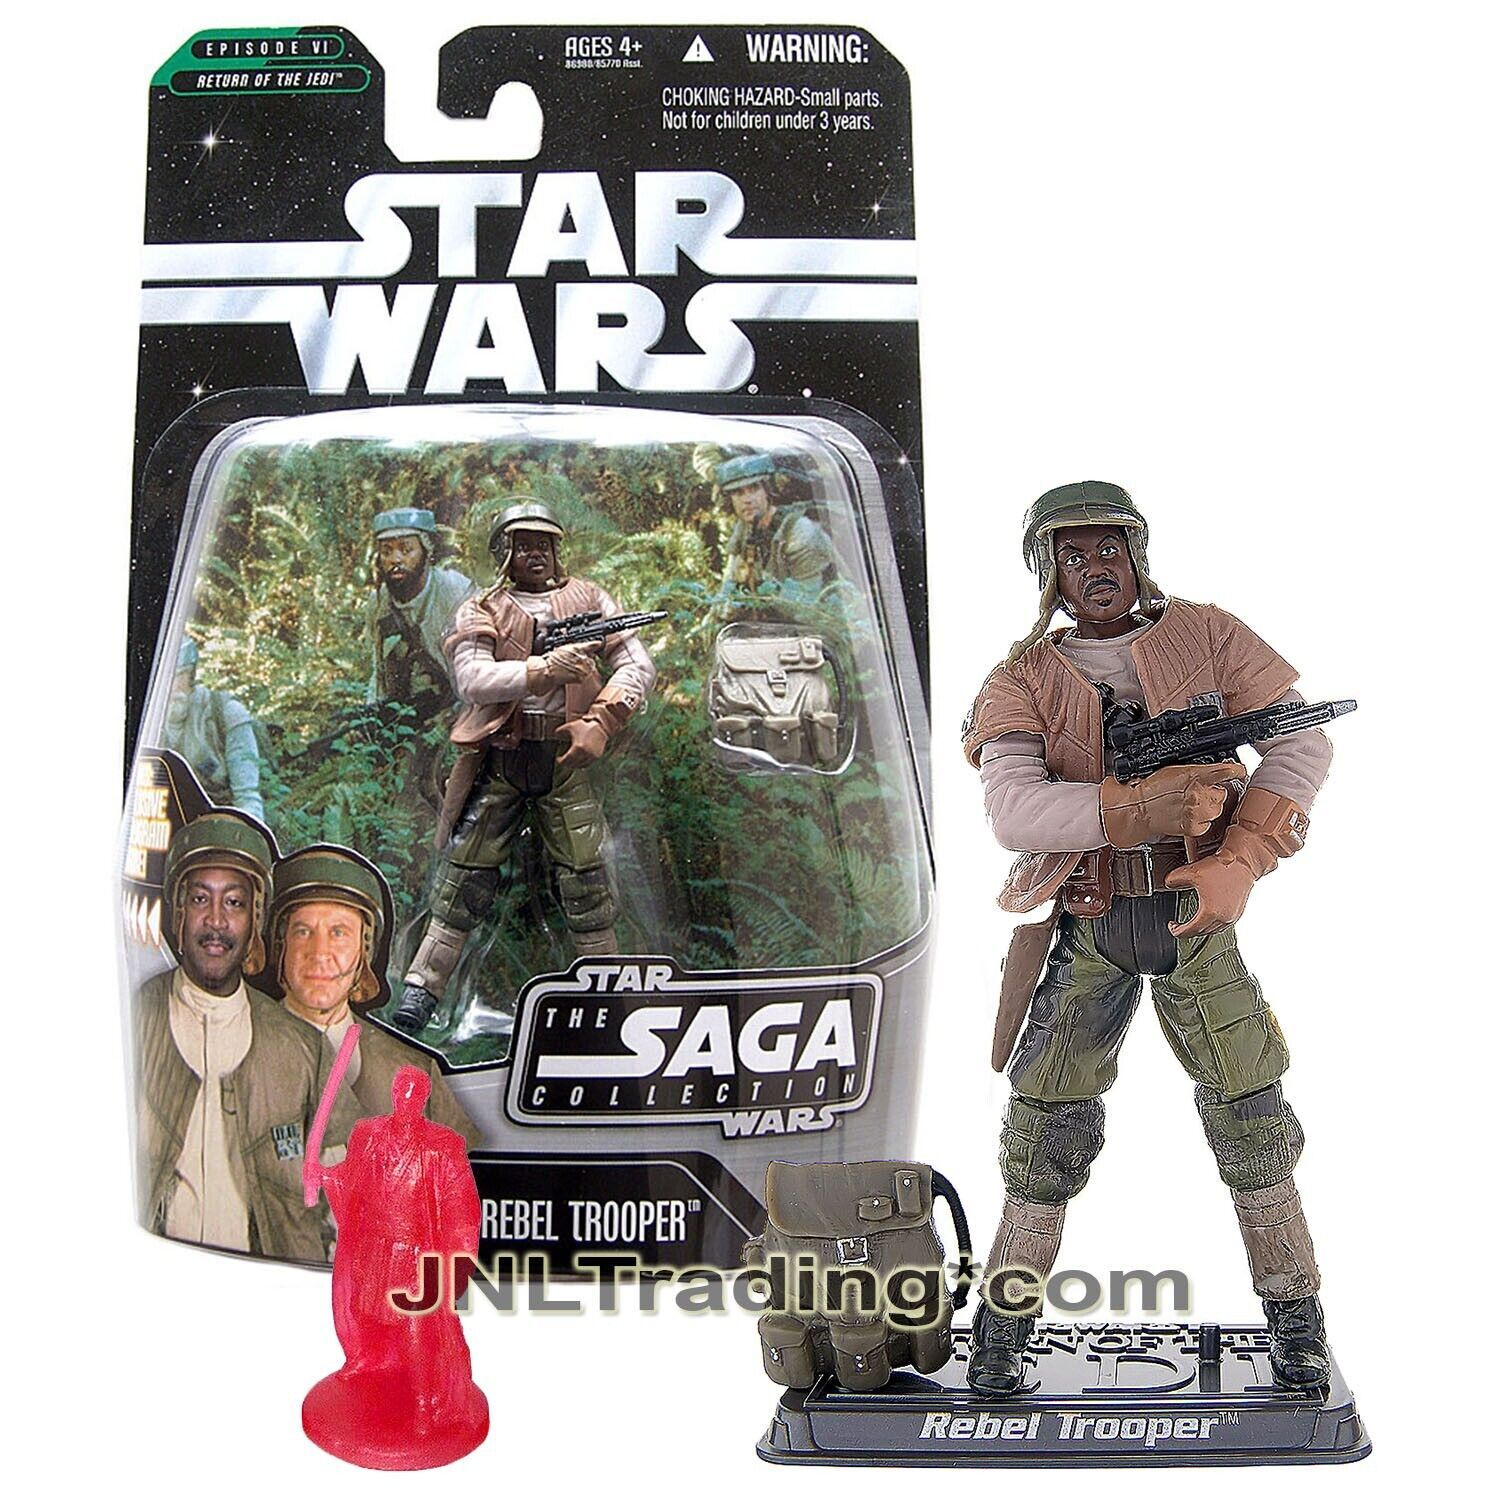 Year 2006 Star Wars The Saga Collection Figure REBEL TROOPER with Obi-Wan Kenobi - $34.99